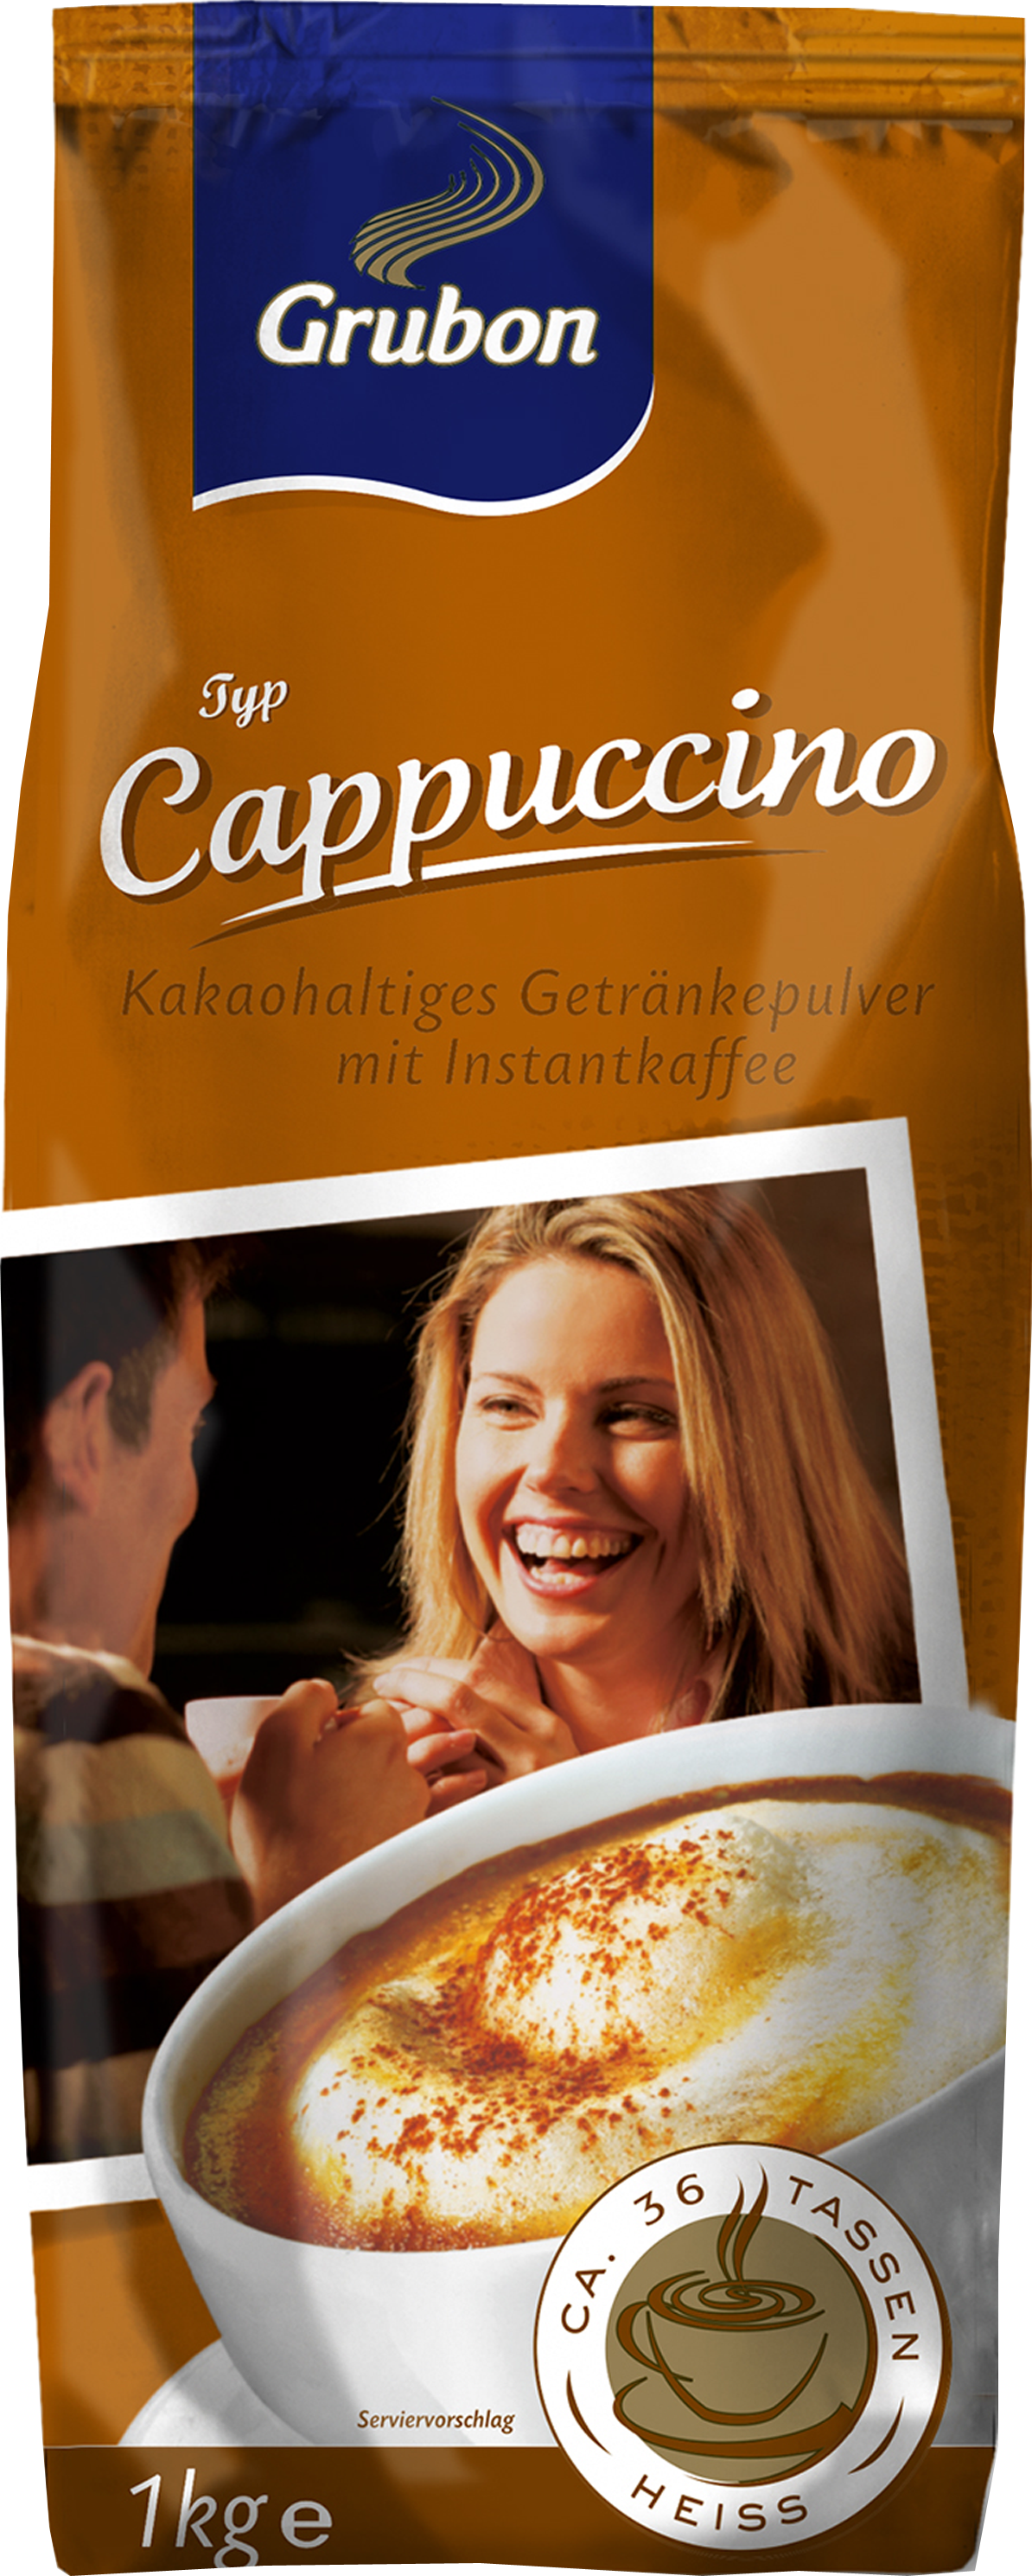 Grubon Cappuccino